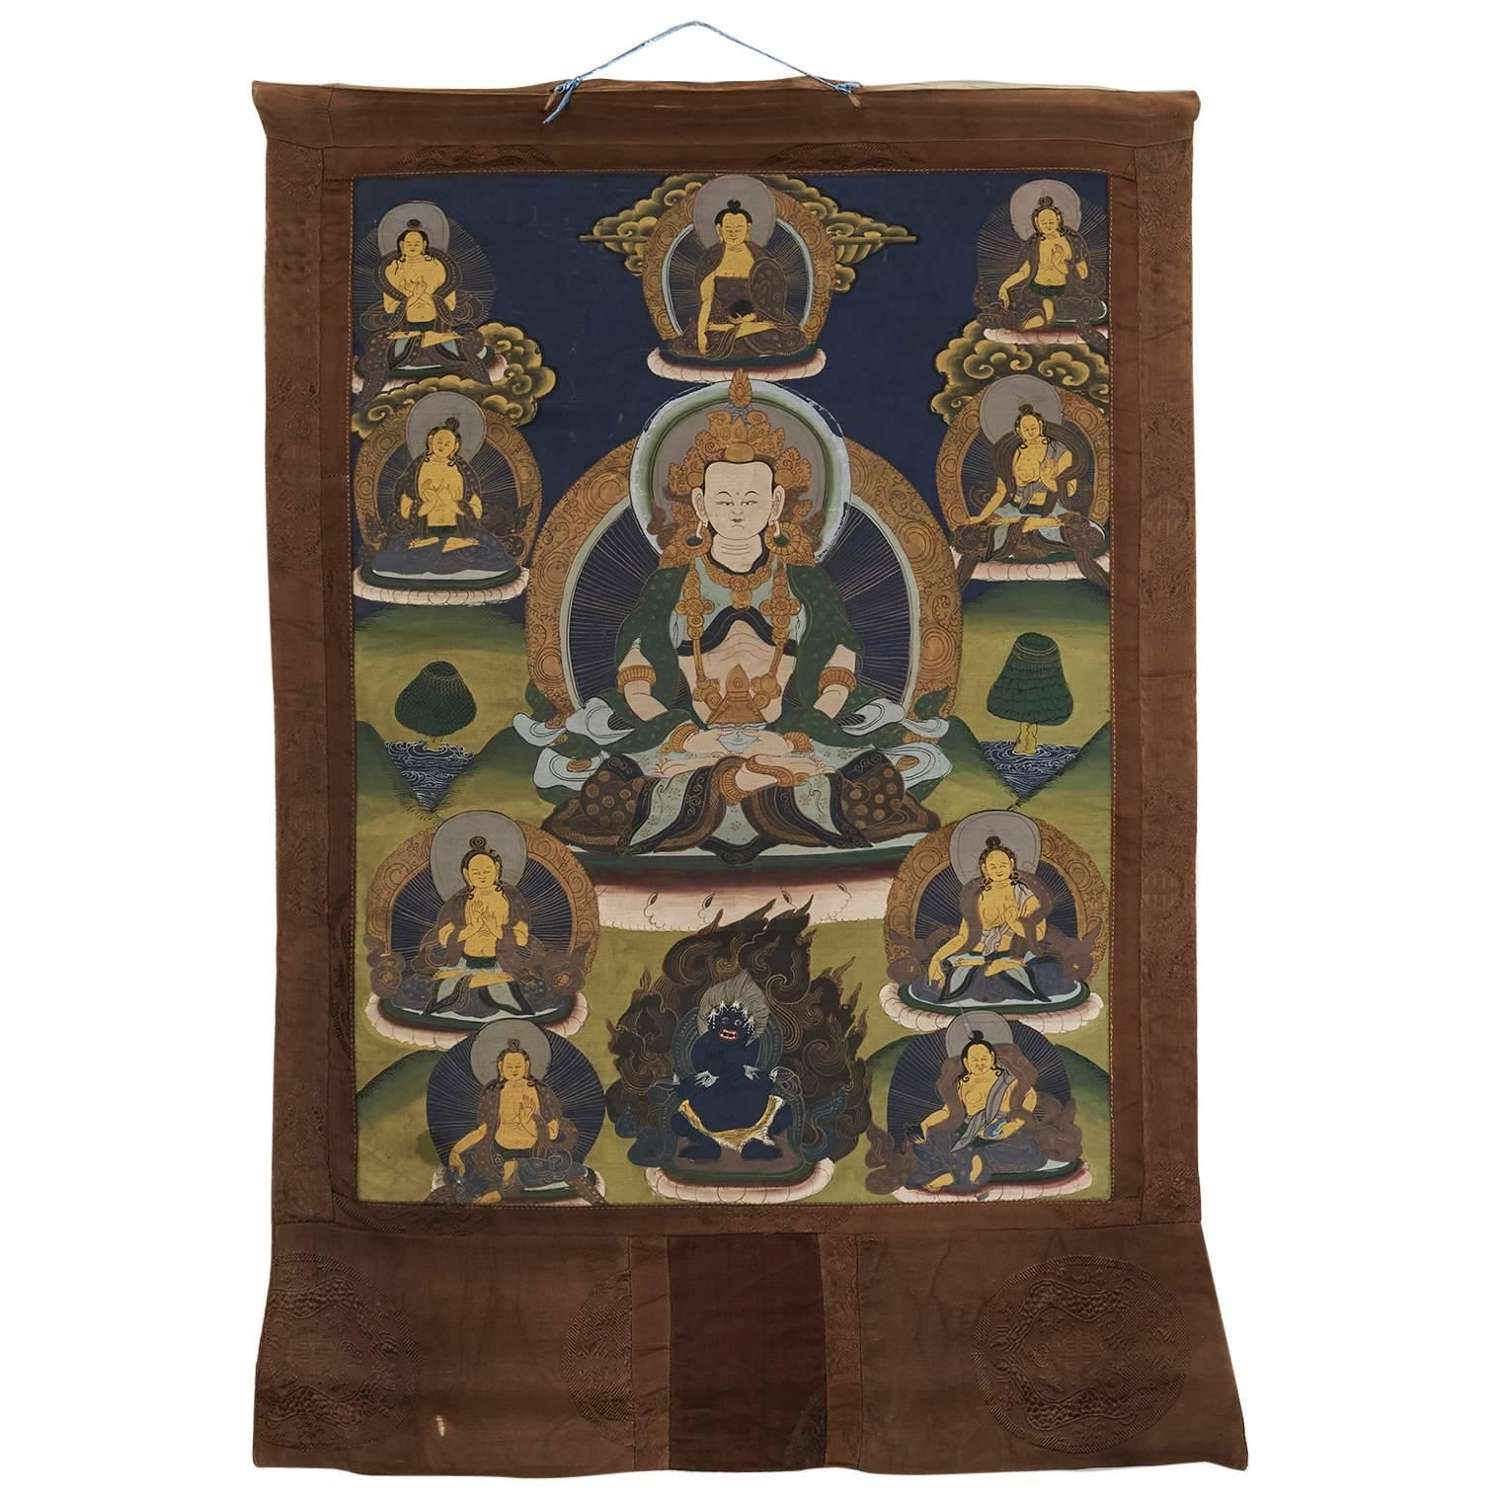 Antique Chinese/Tibetan Thanka with Buddha & Gods, 19th Century